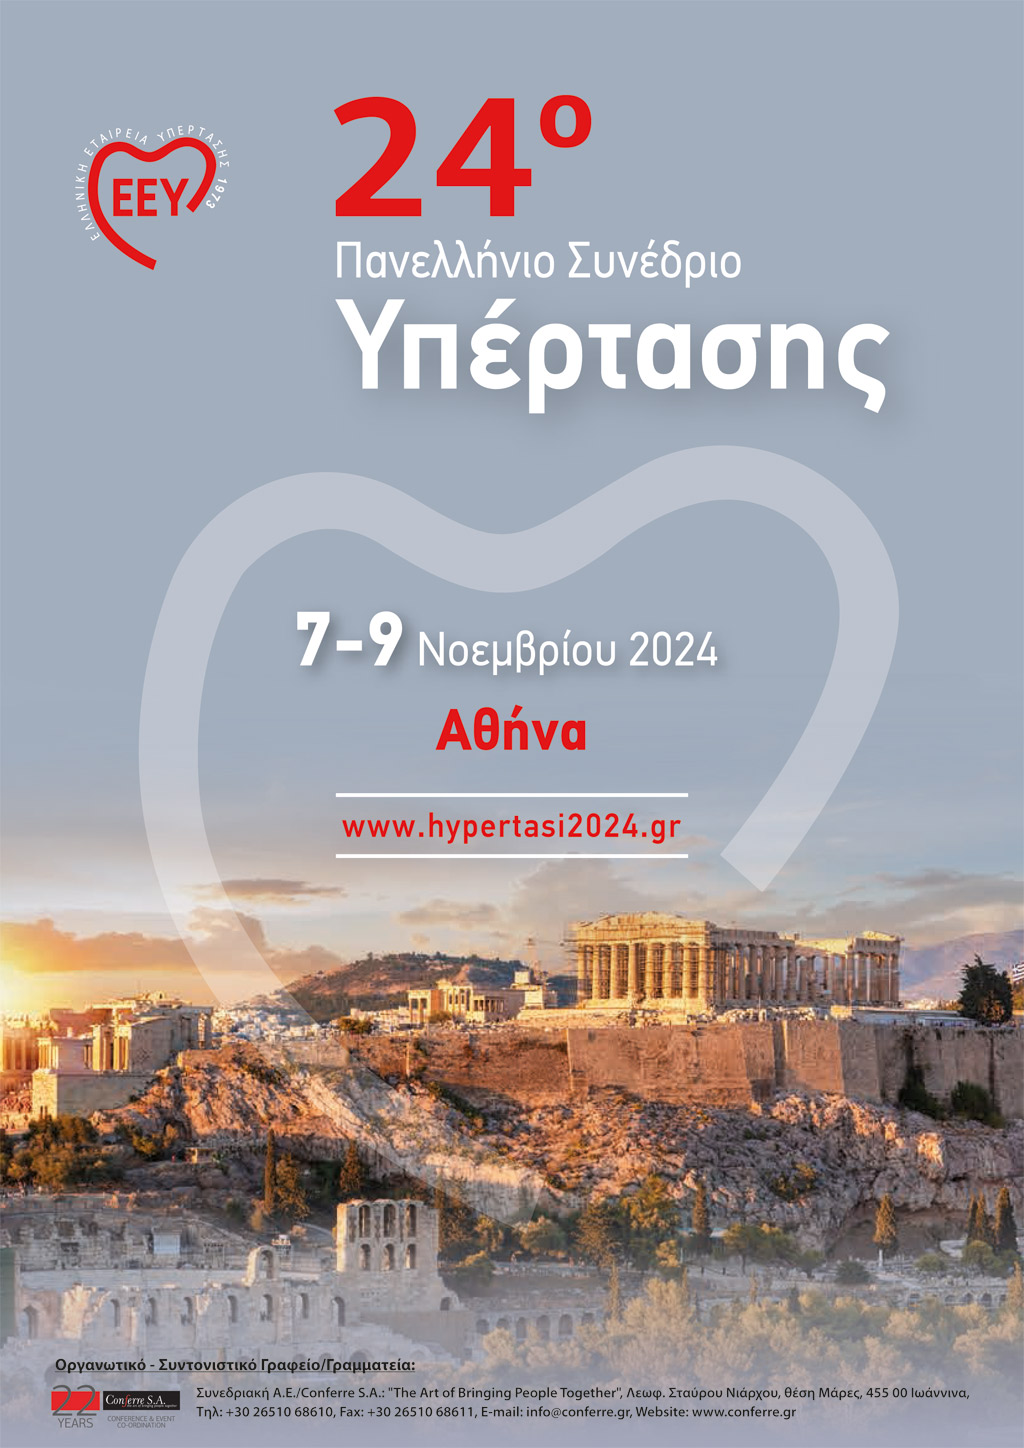 24o Πανελλήνιο Συνέδριο Υπέρτασης - Αθήνα, 7-9 Νοεμβρίου 2024